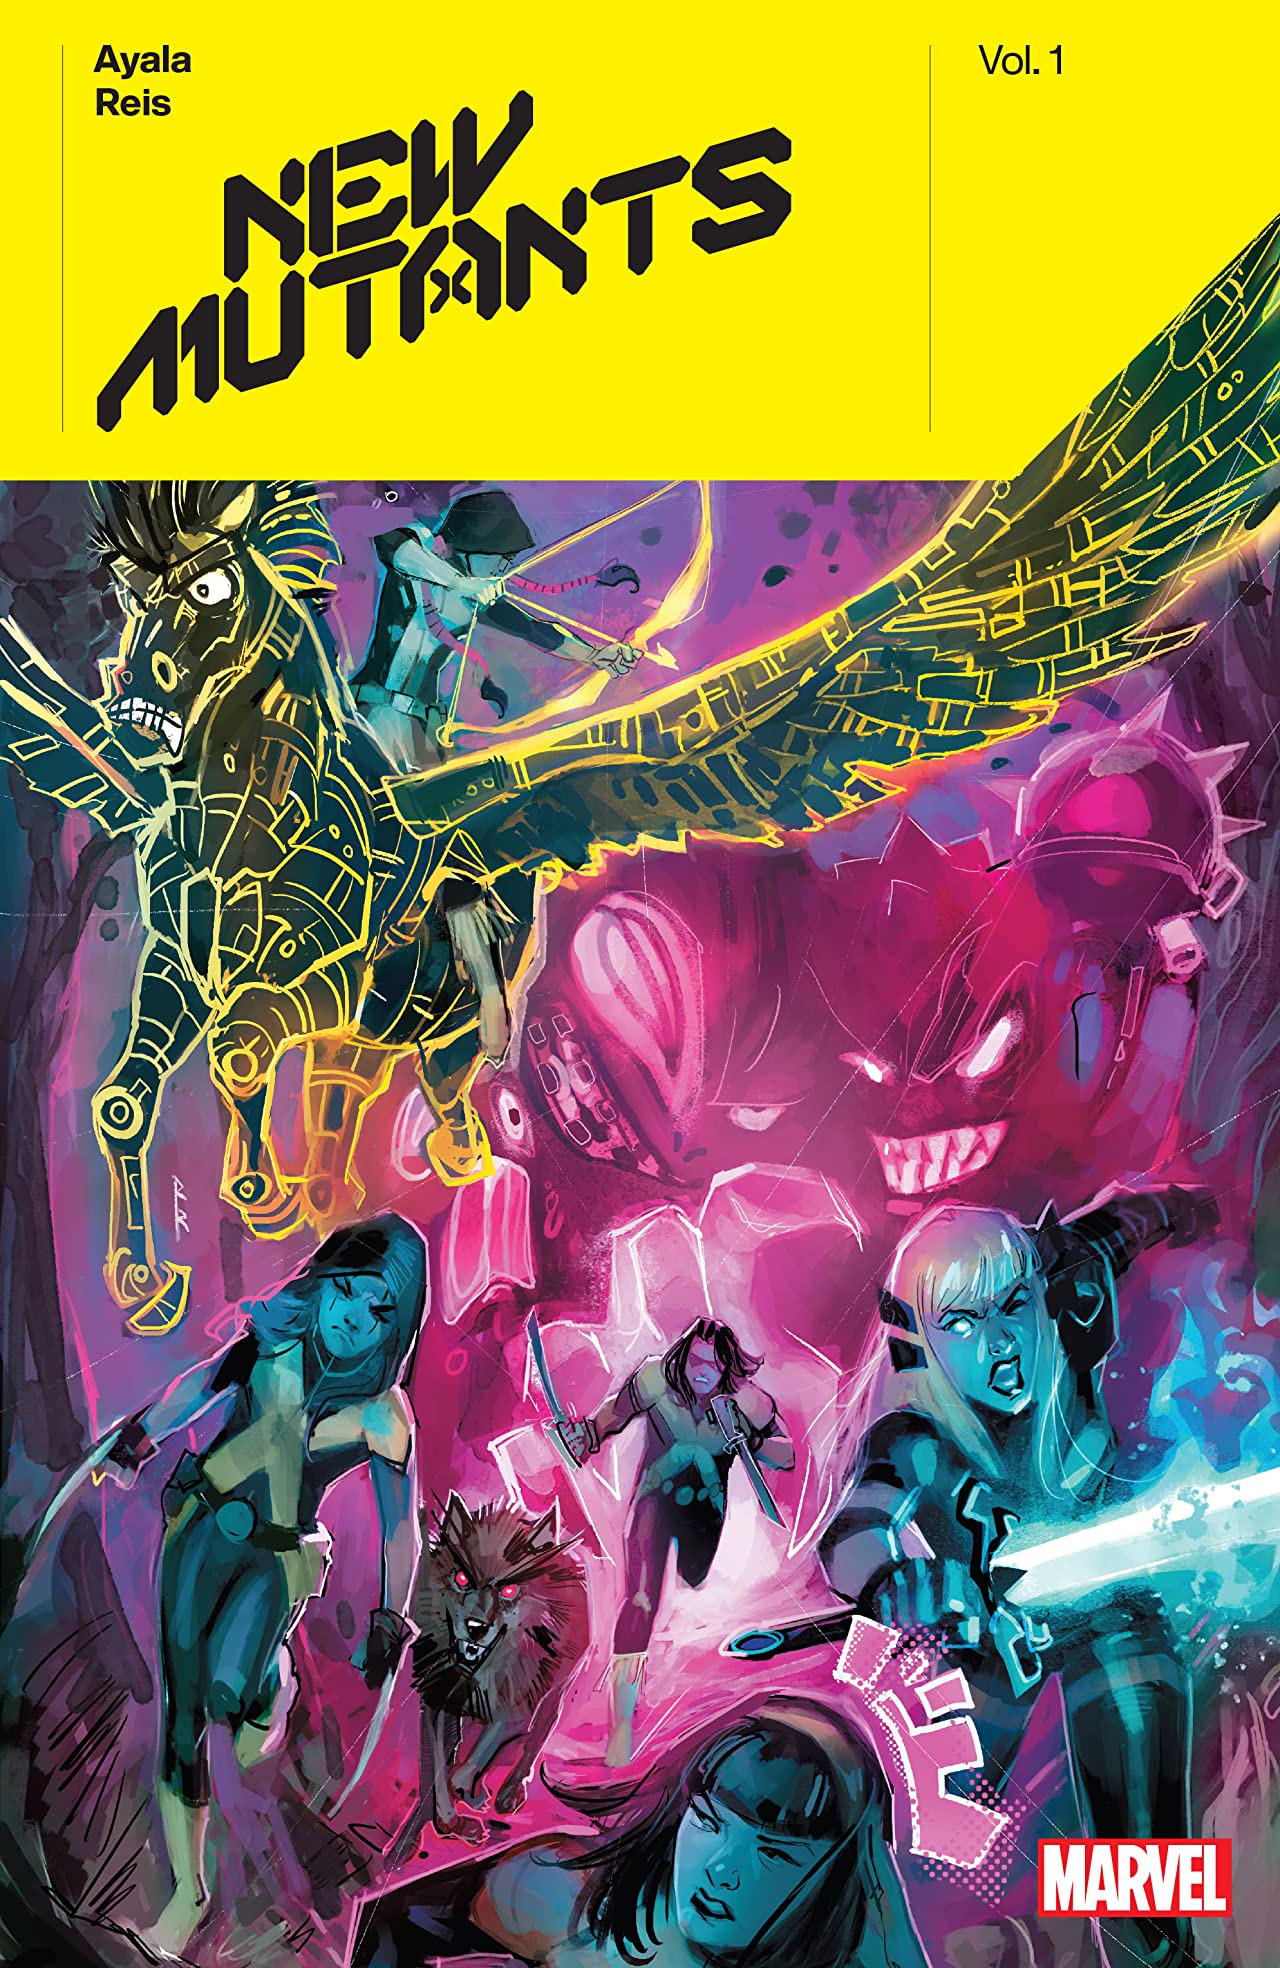 New Mutants by Vita Ayala Vol. 1 (Trade Paperback)